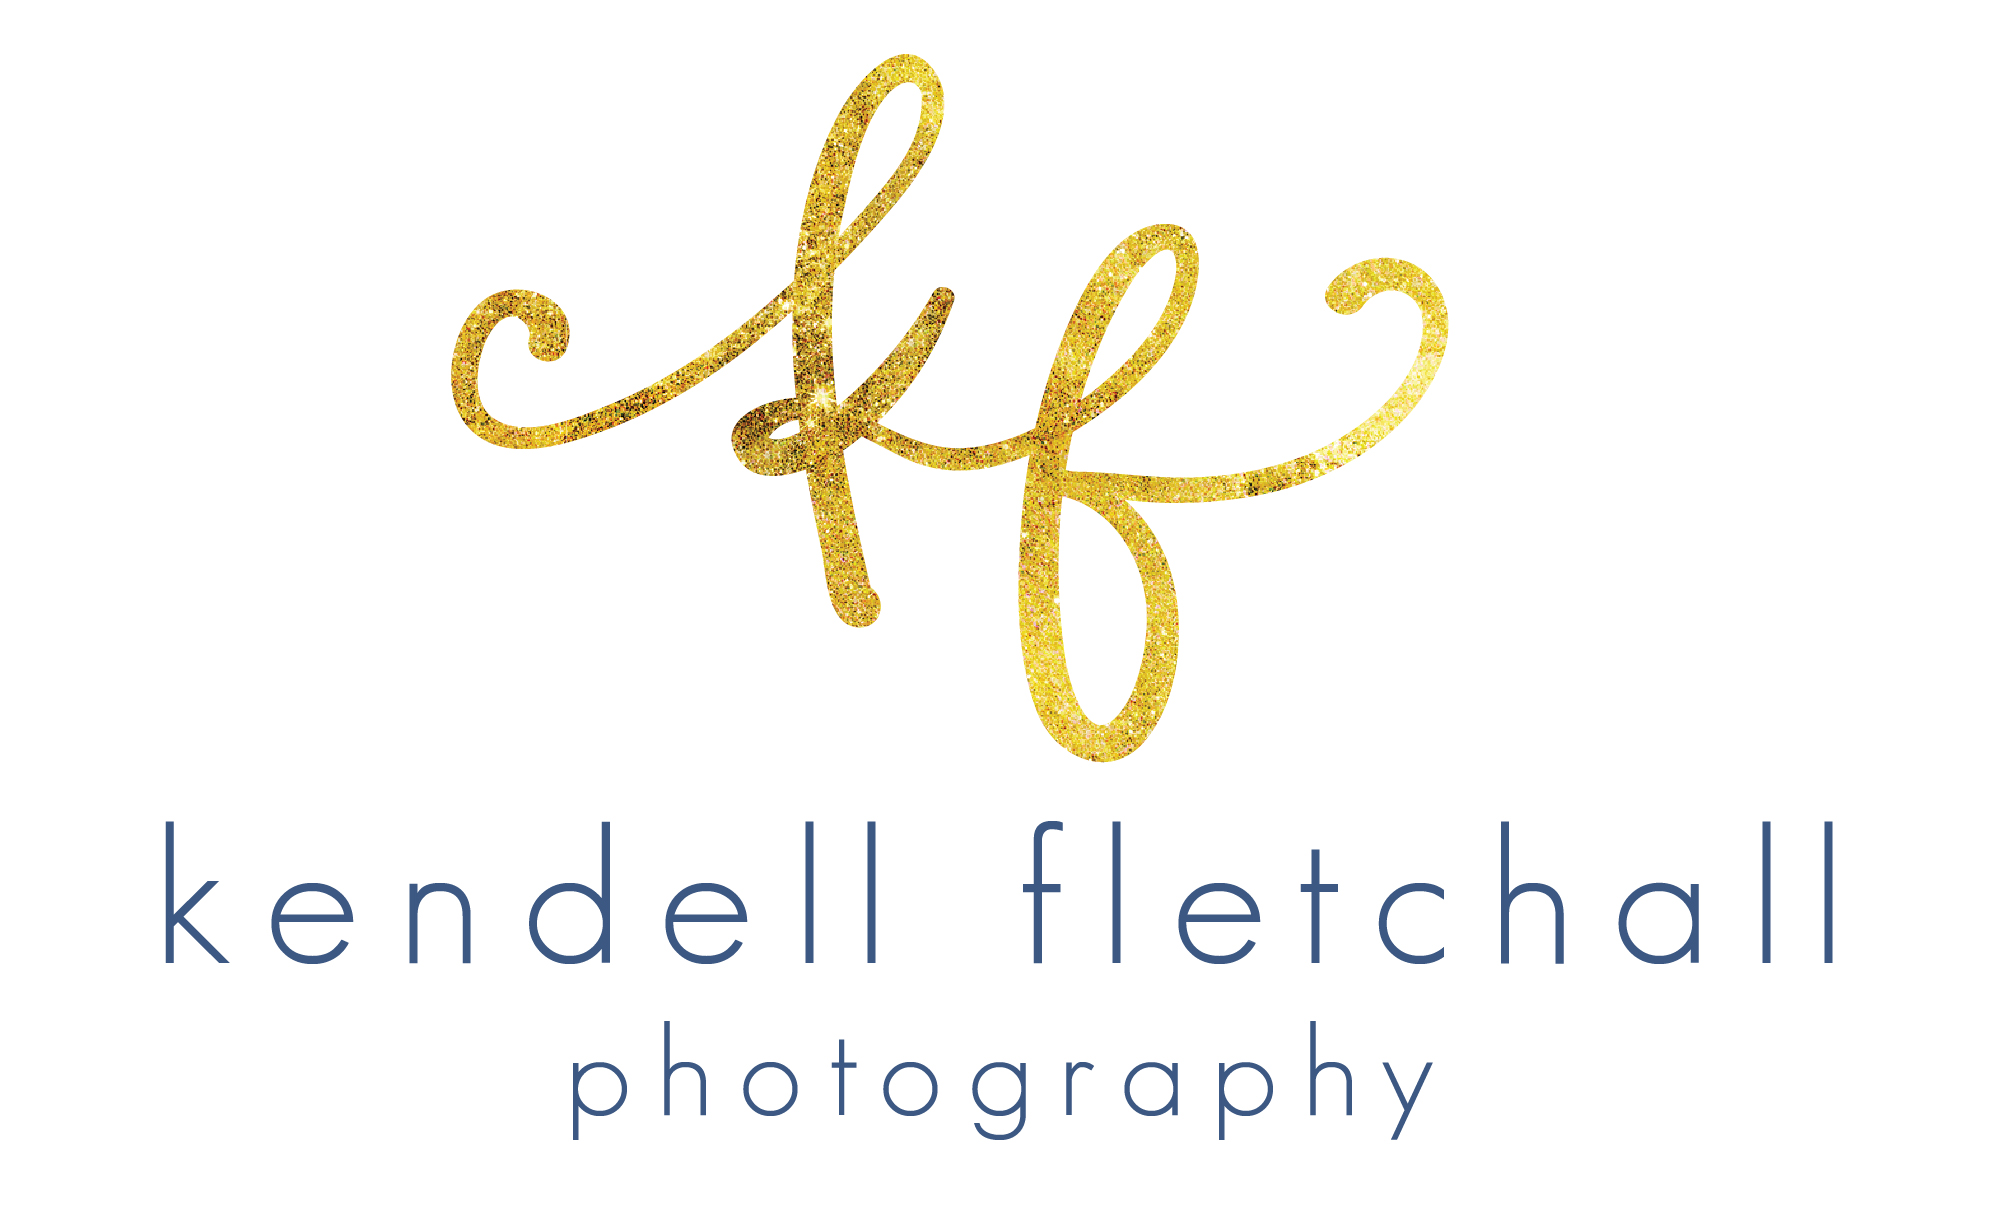 Kendell Fletchall photography